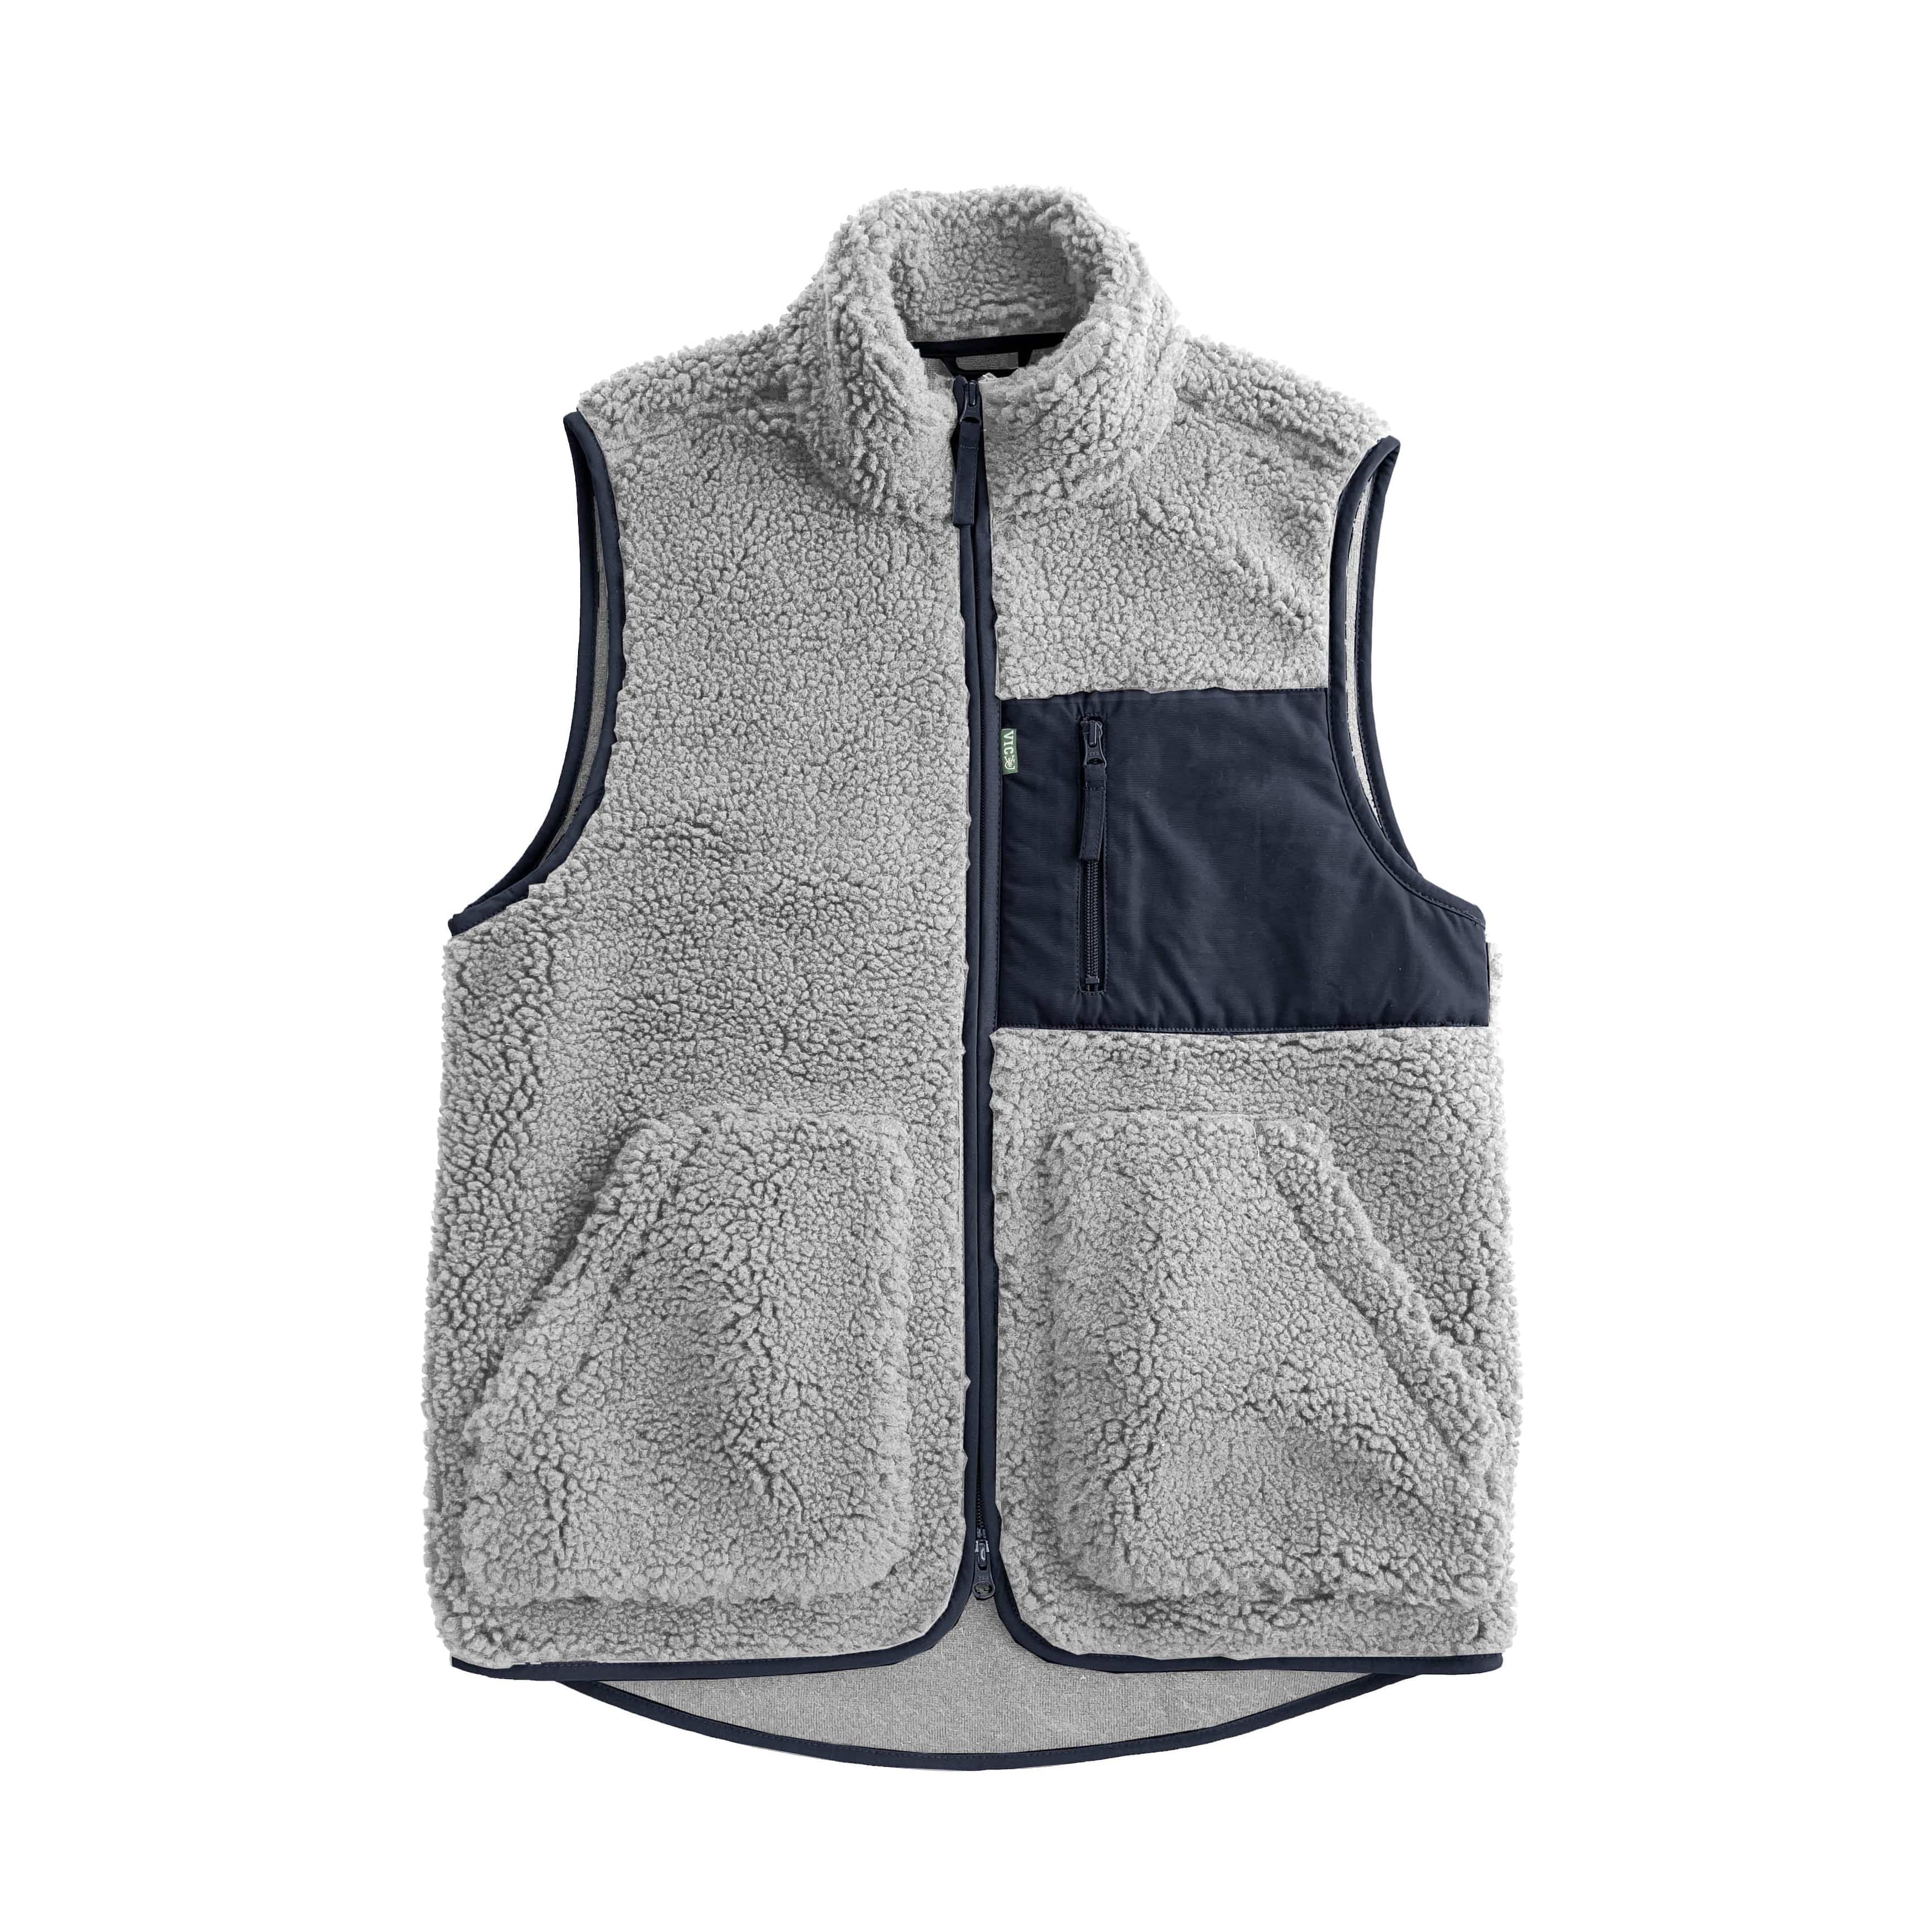 sherpa pile fleece vest. classic vintage style